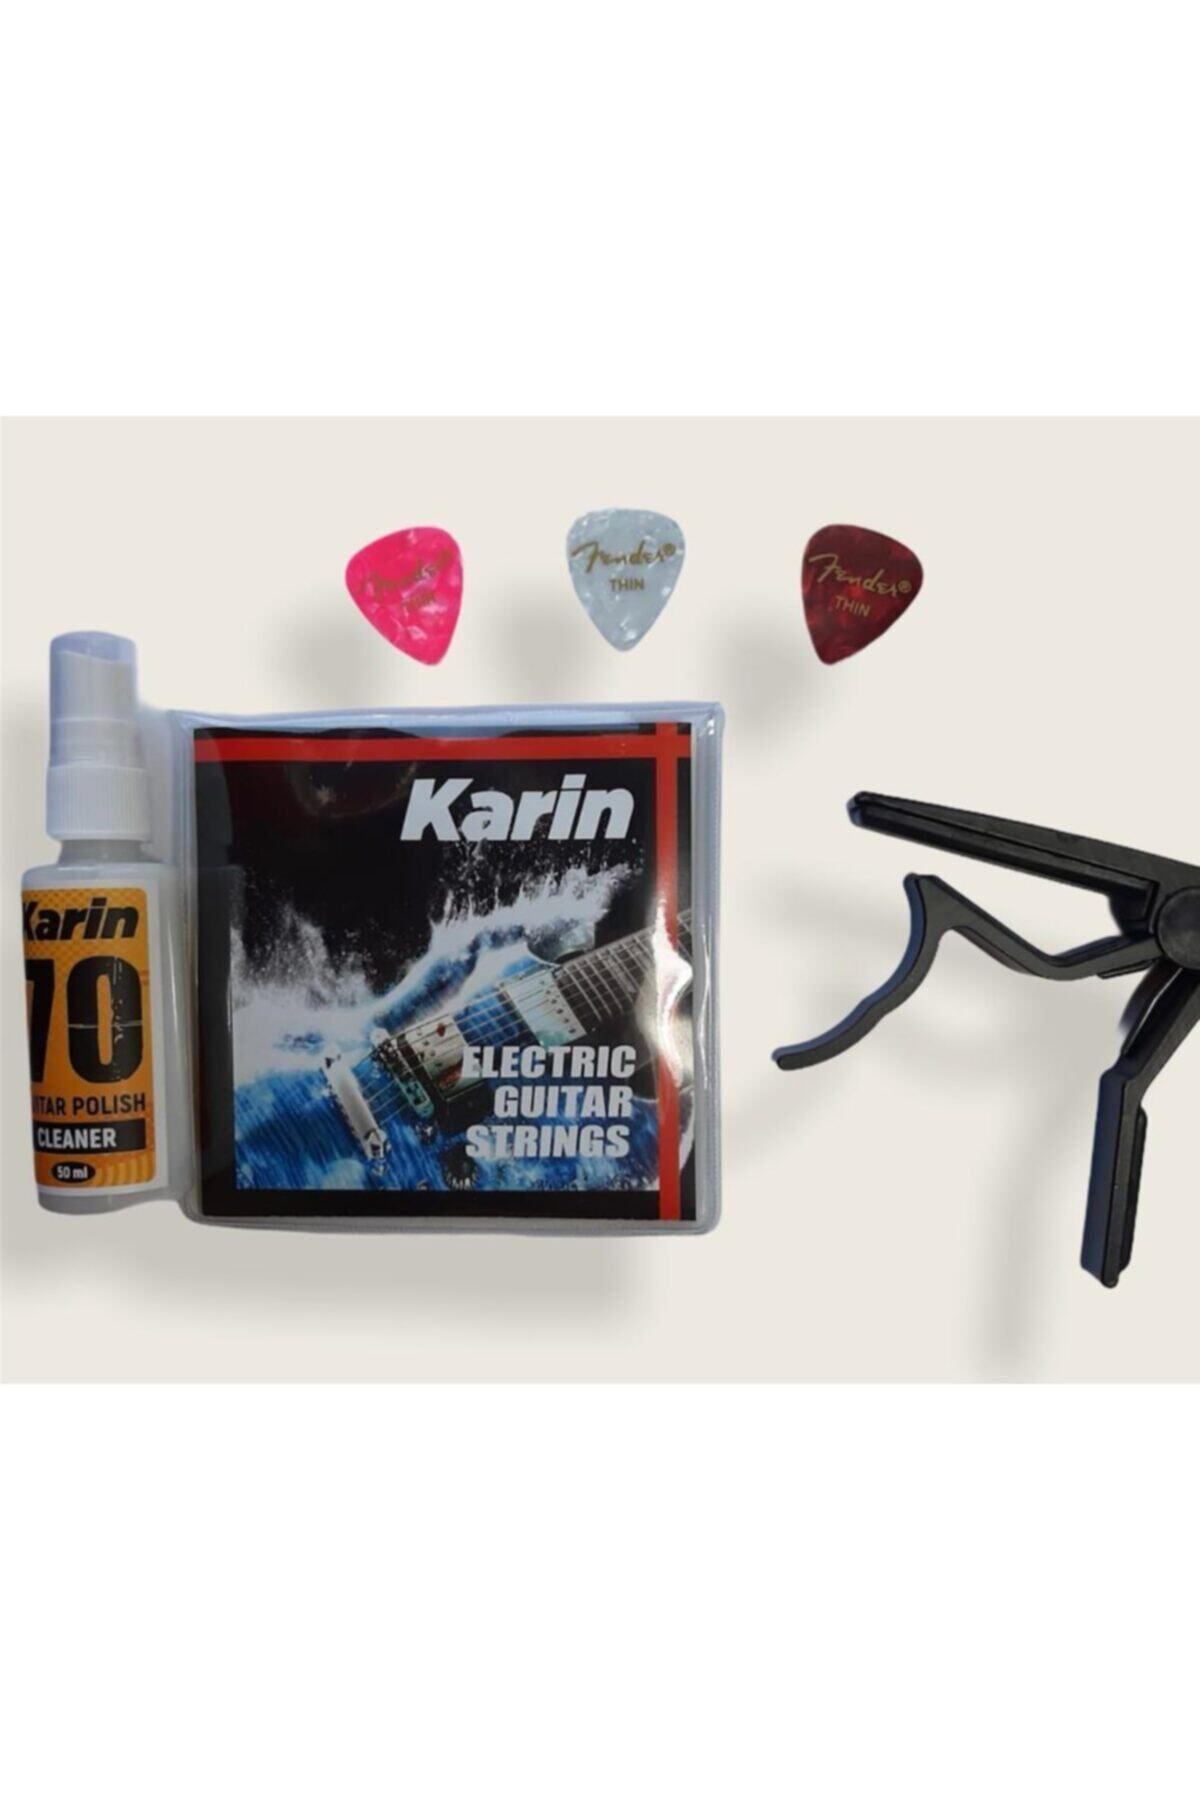 Karin Electric Guitar Strings (elektro Gitar Tel) + Gitar Keman Temizleyici + Nemesis Capo +3 Fender Pena